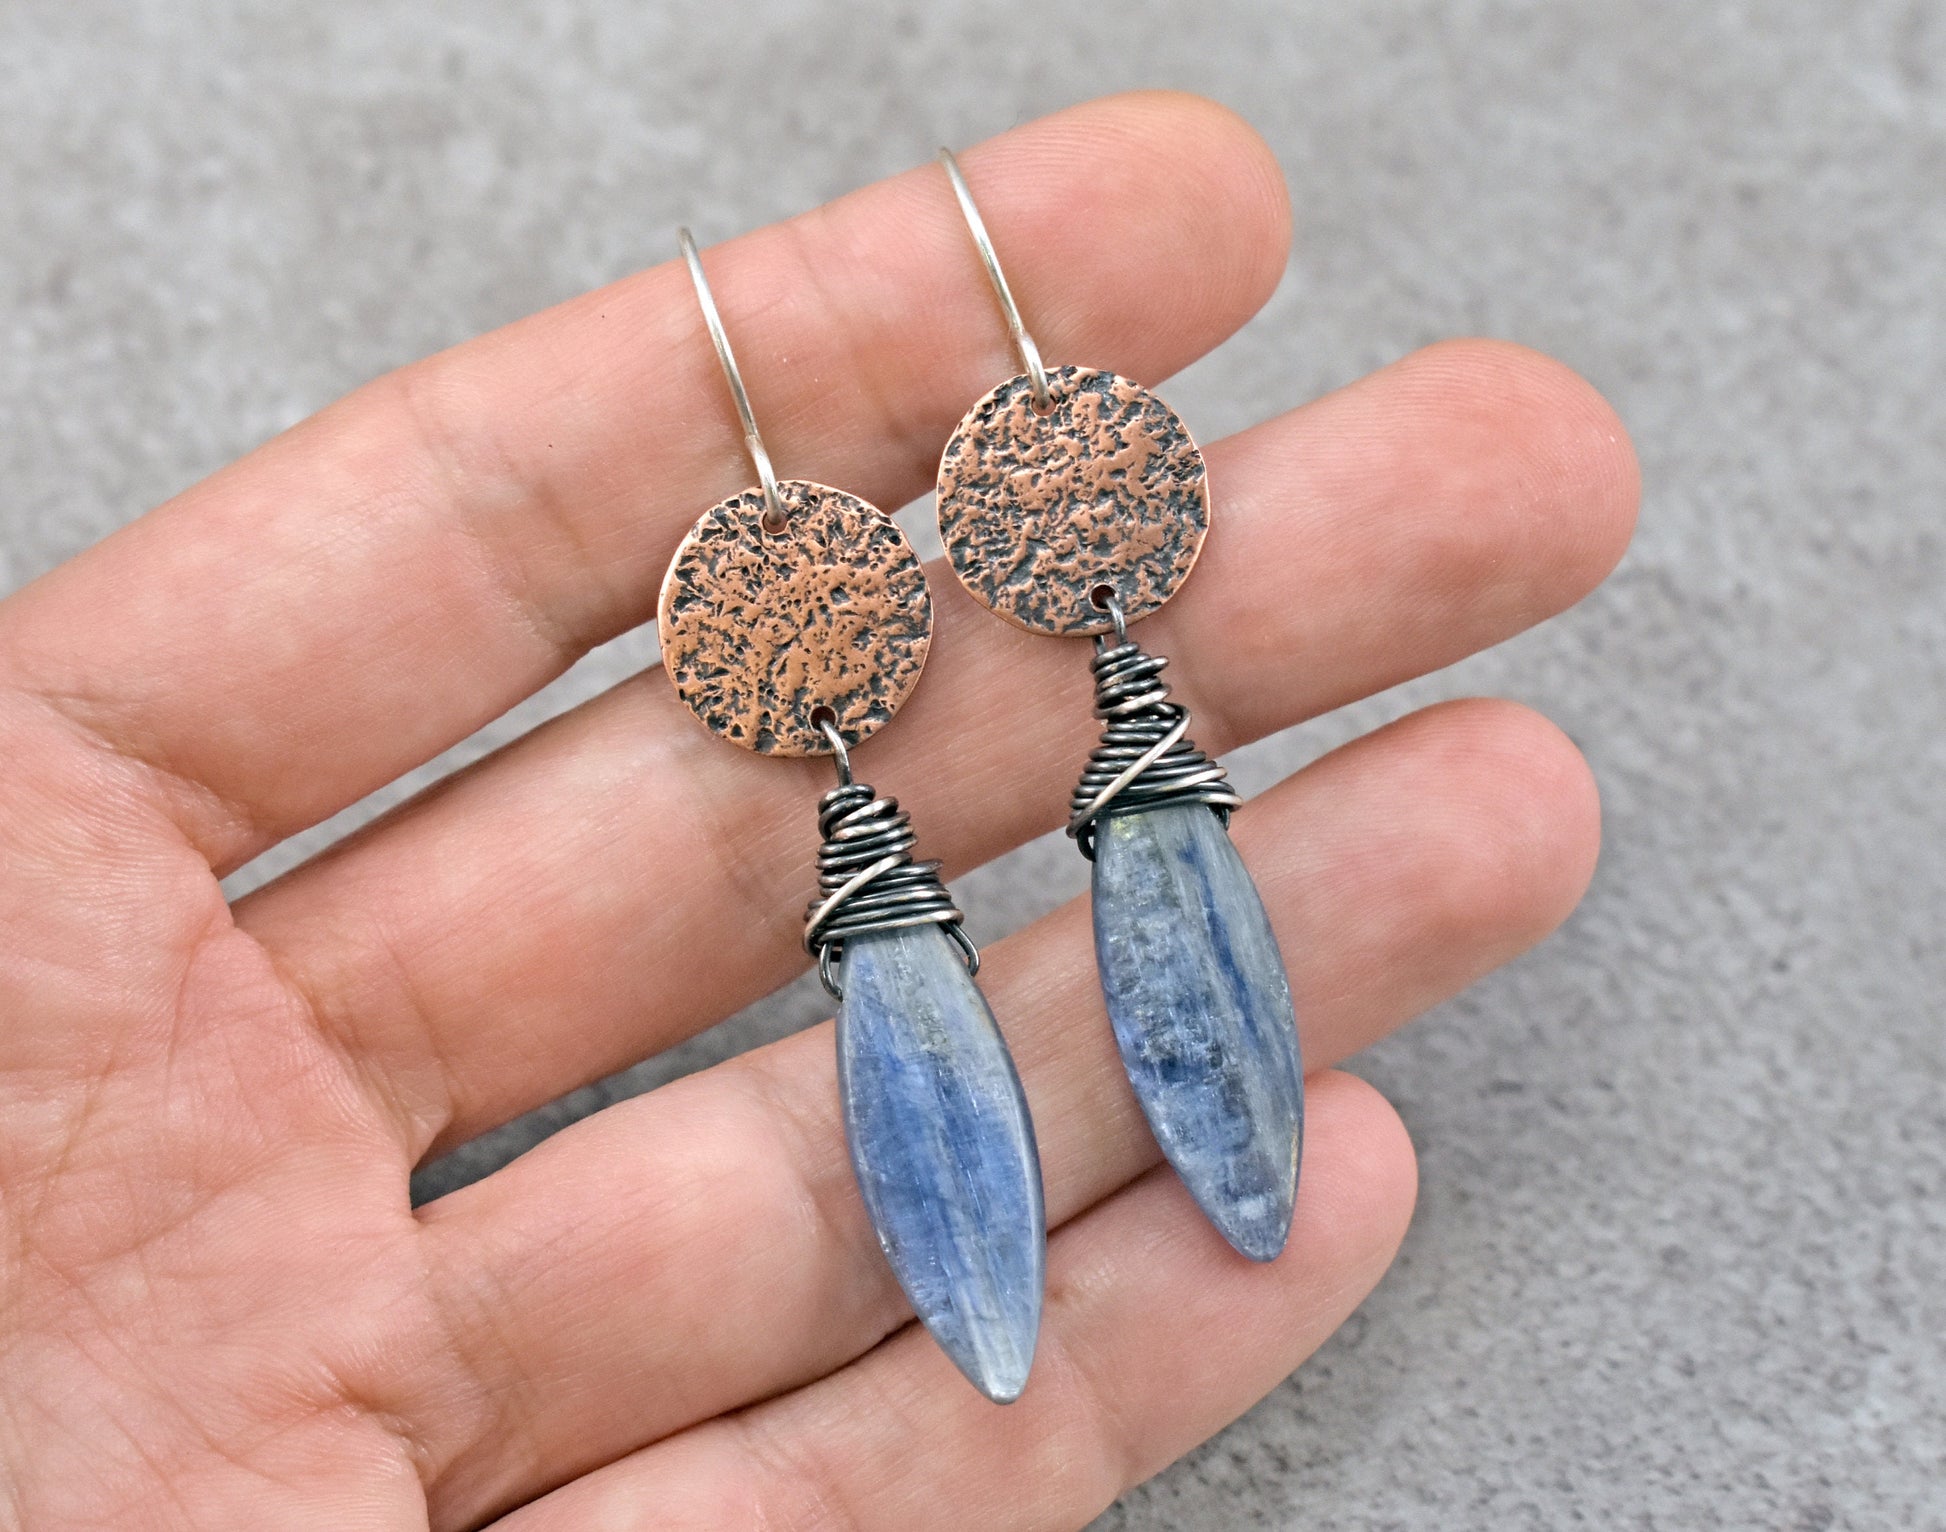 Blue Kyanite Earrings Handmade, Rustic Mixed Metal Jewelry, Copper Circle Dangles, Sterling Silver Wire